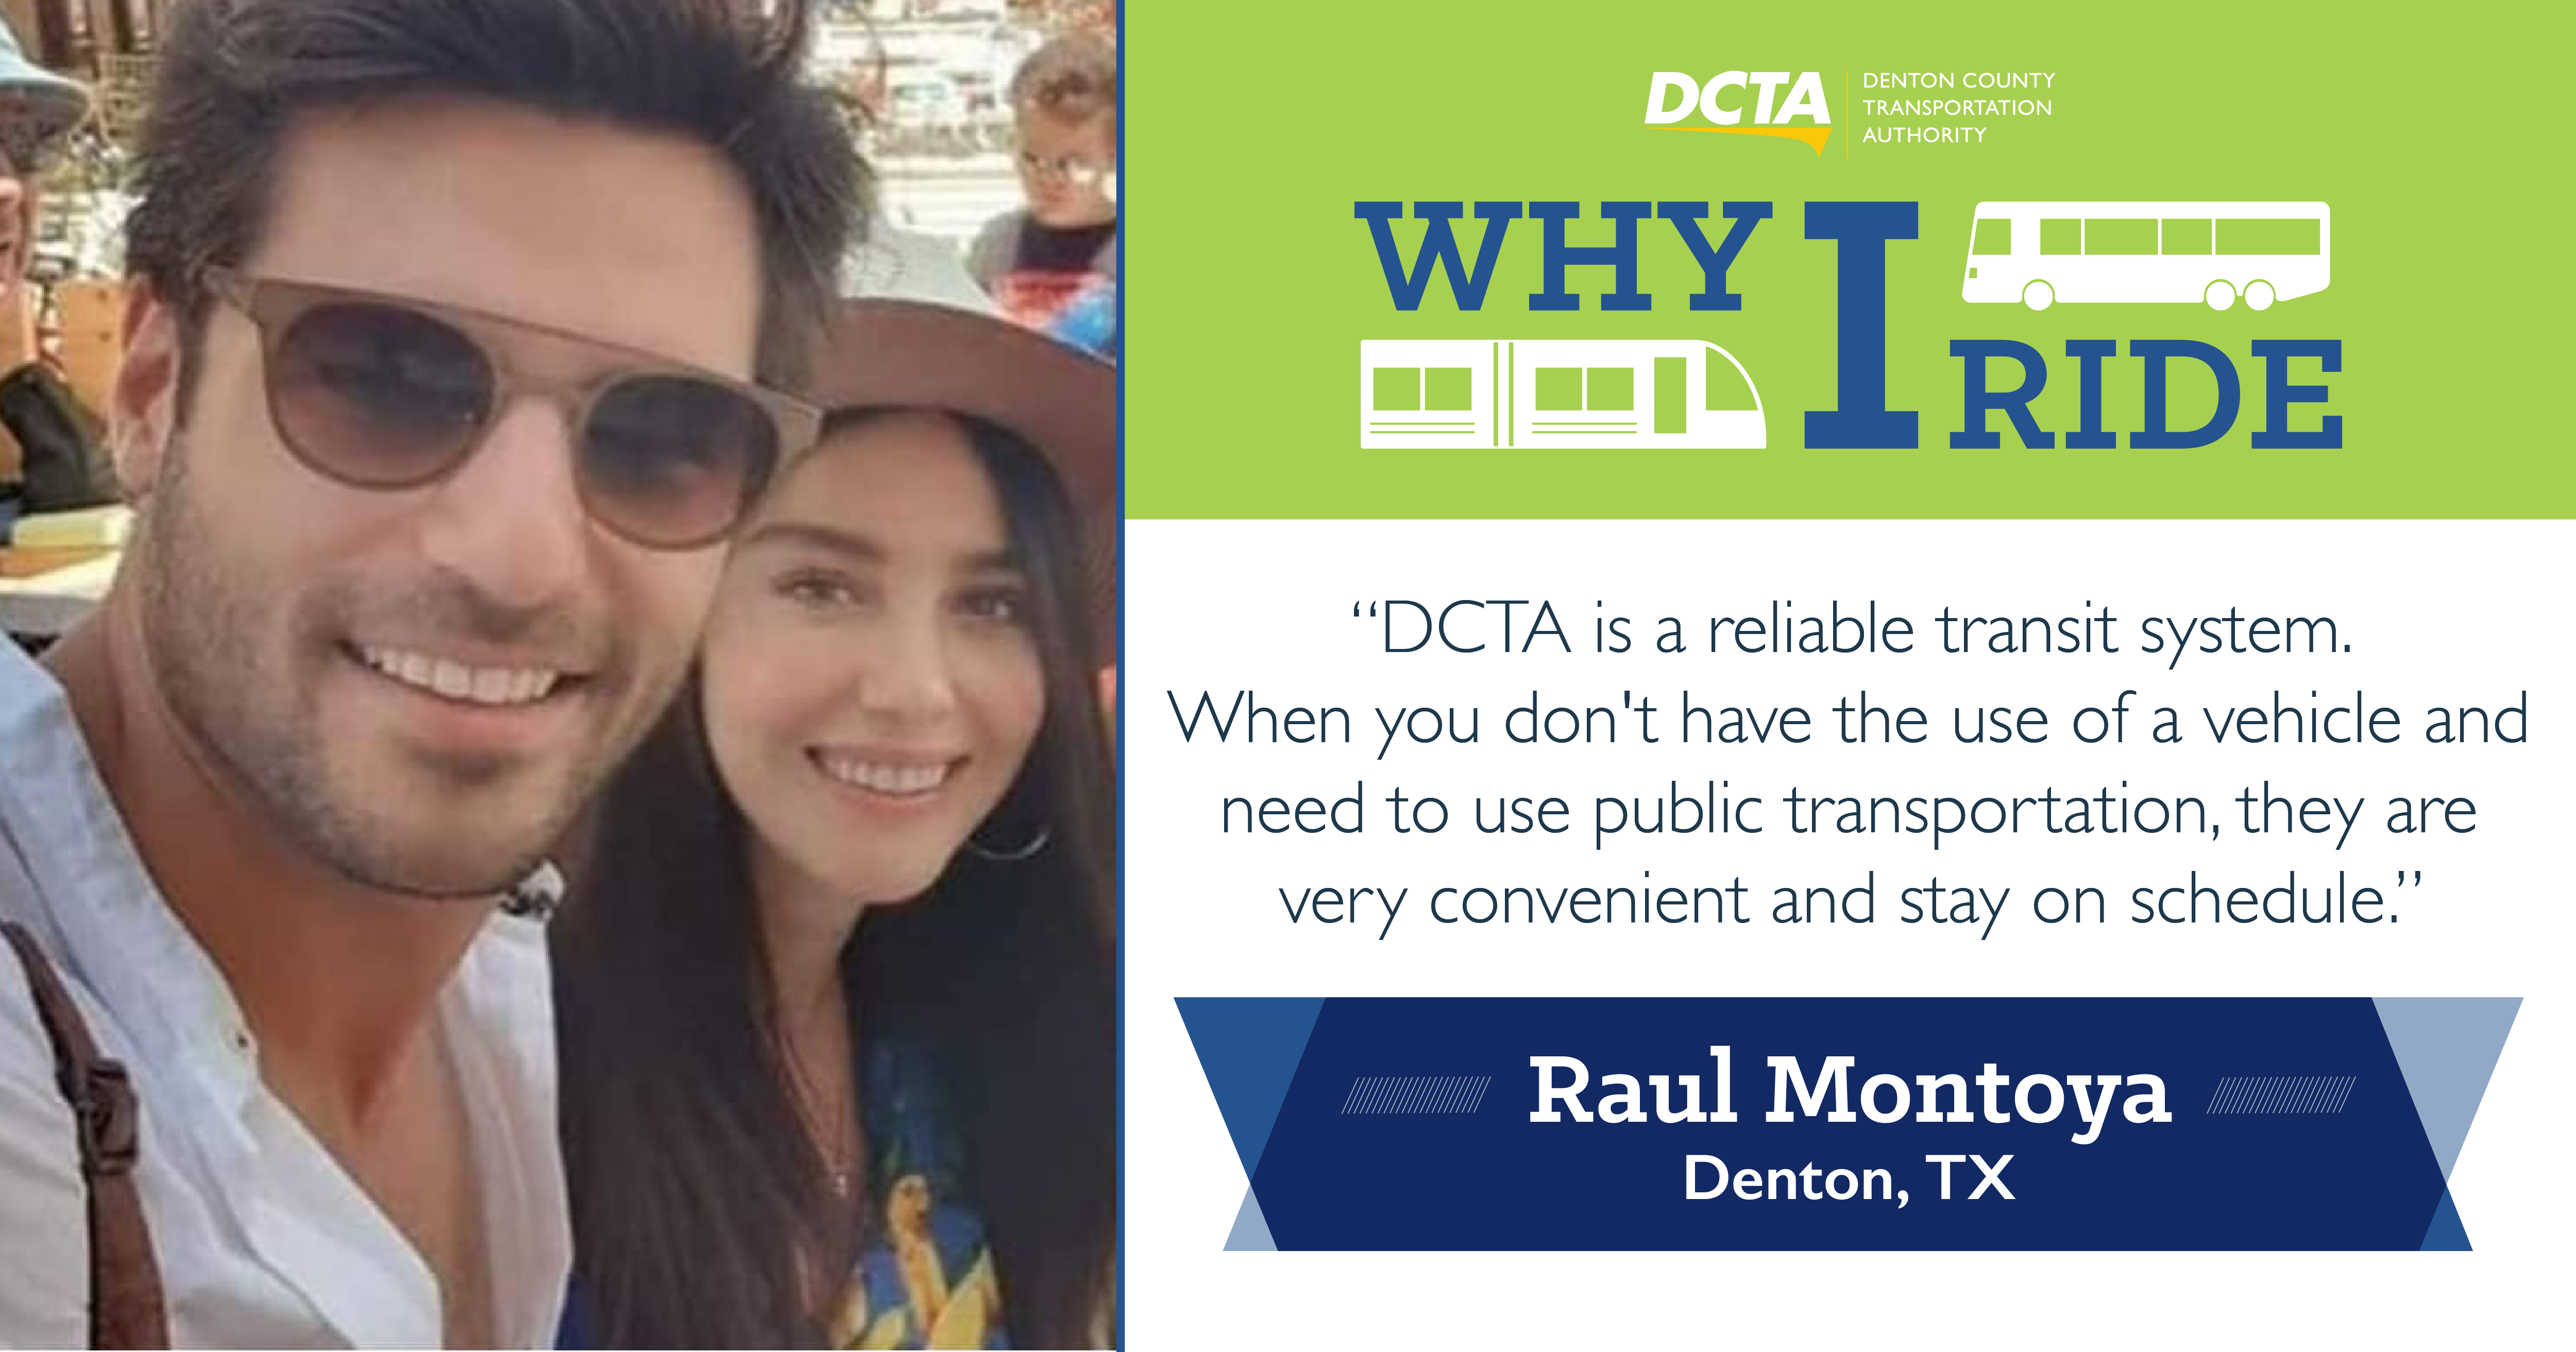 #WhyIRideDCTA: Raul Montoya